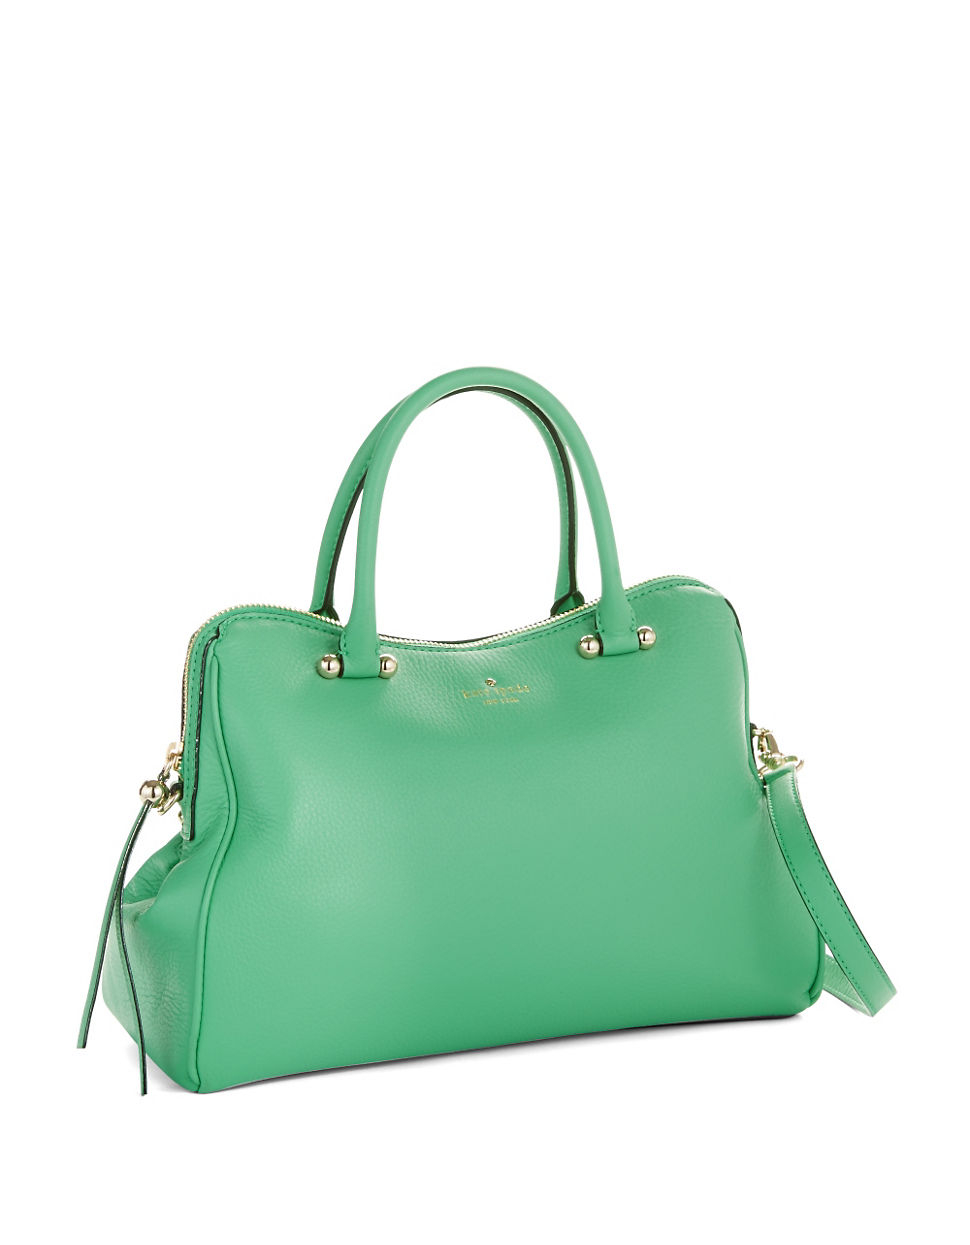 Lyst - Kate spade new york Charles Street Audrey Handbag in Green